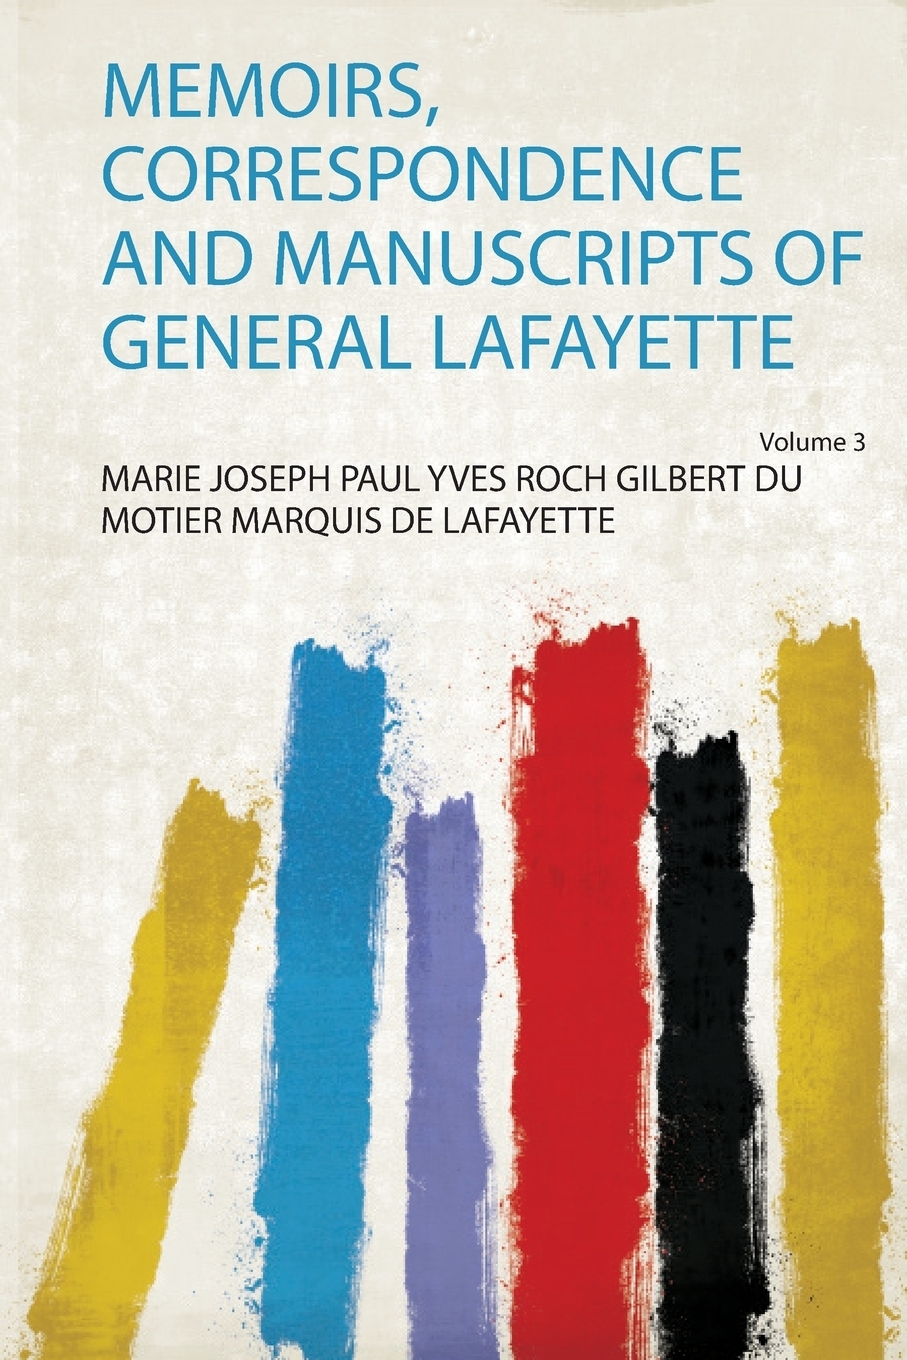 Memoirs, Correspondence and Manuscripts of General Lafayette